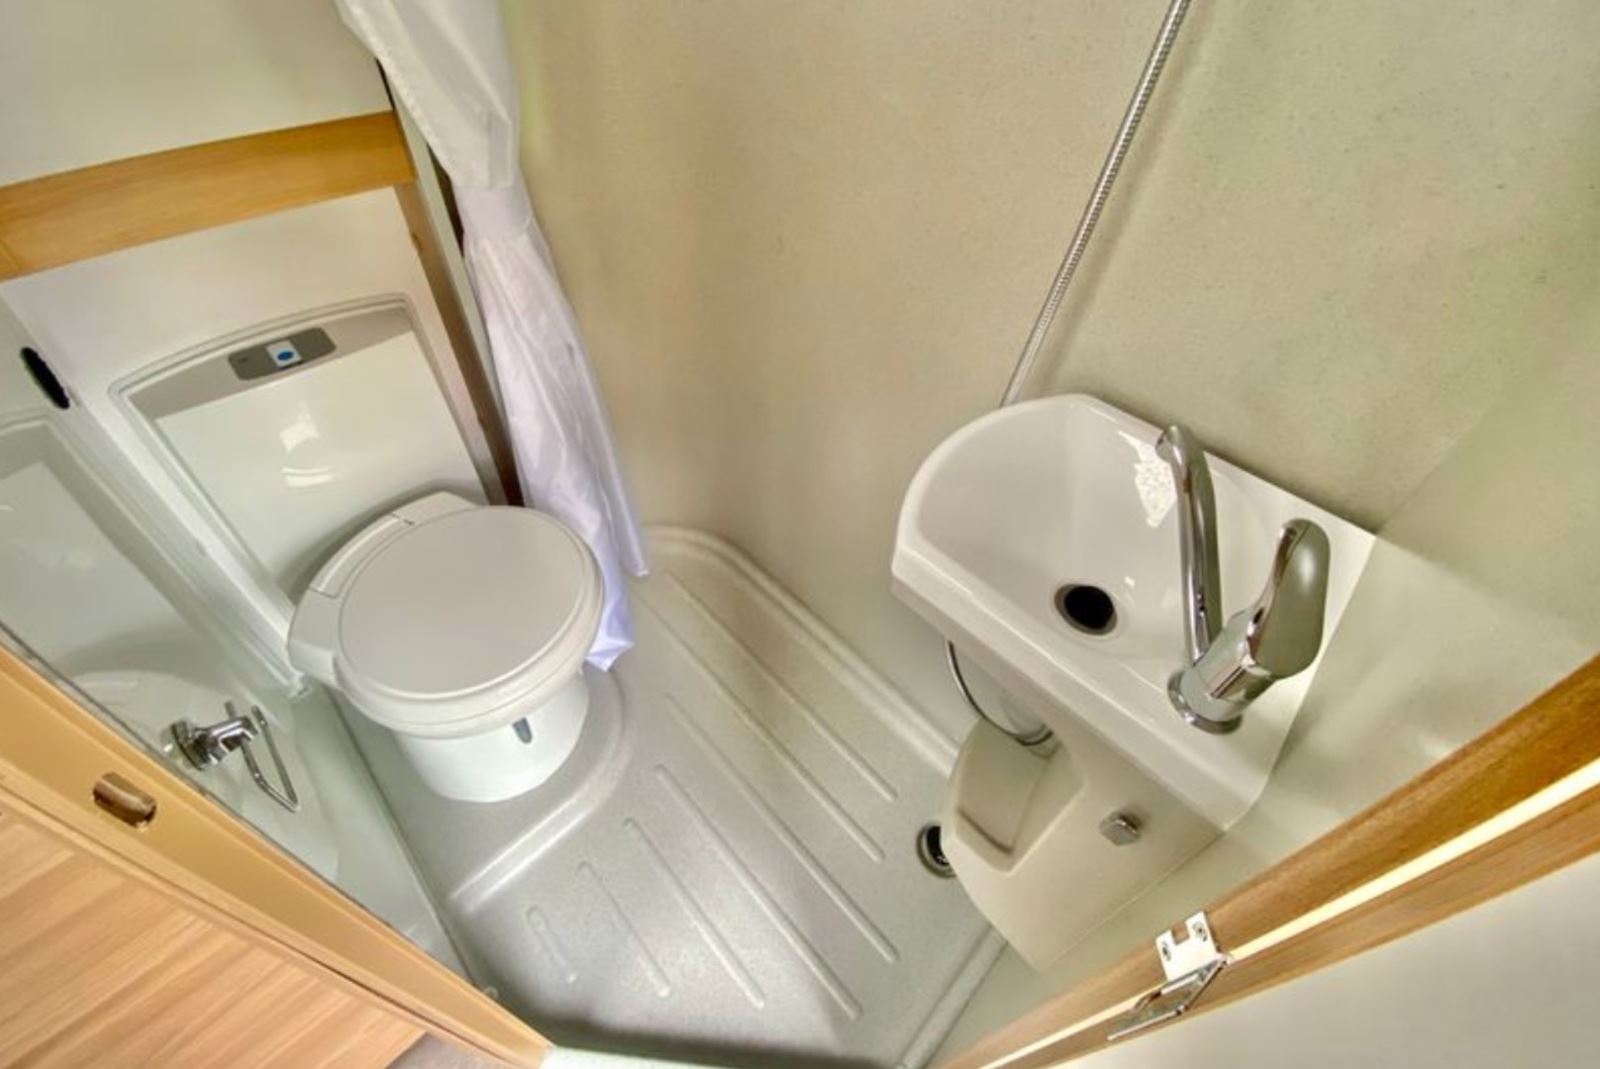 A caravan wet room style washroom